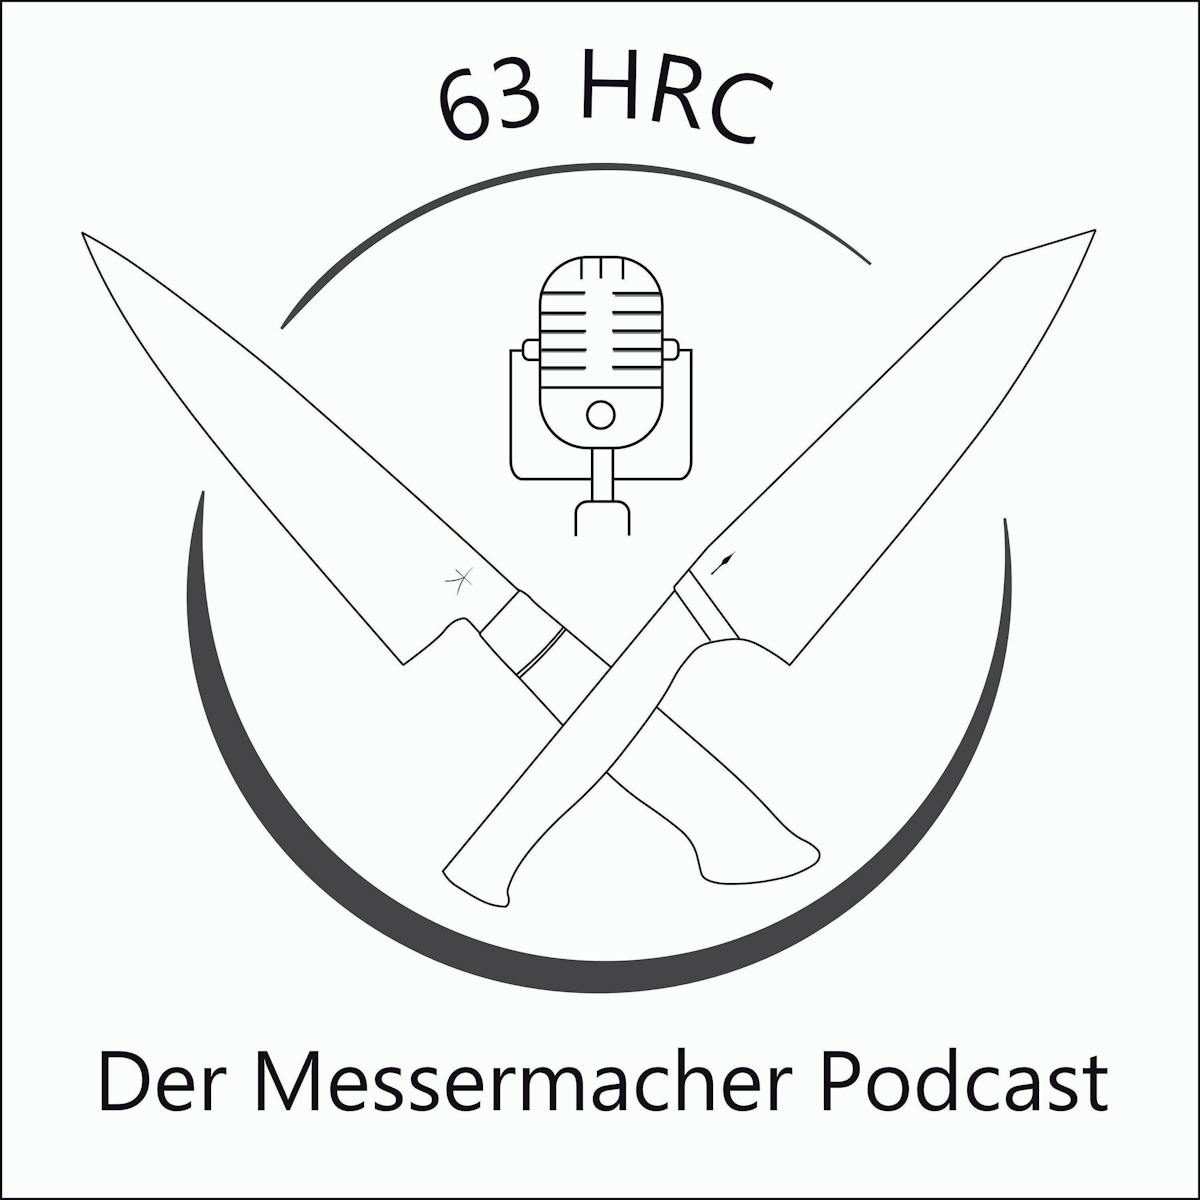 Klingenland beim Podcast "63 HRC"